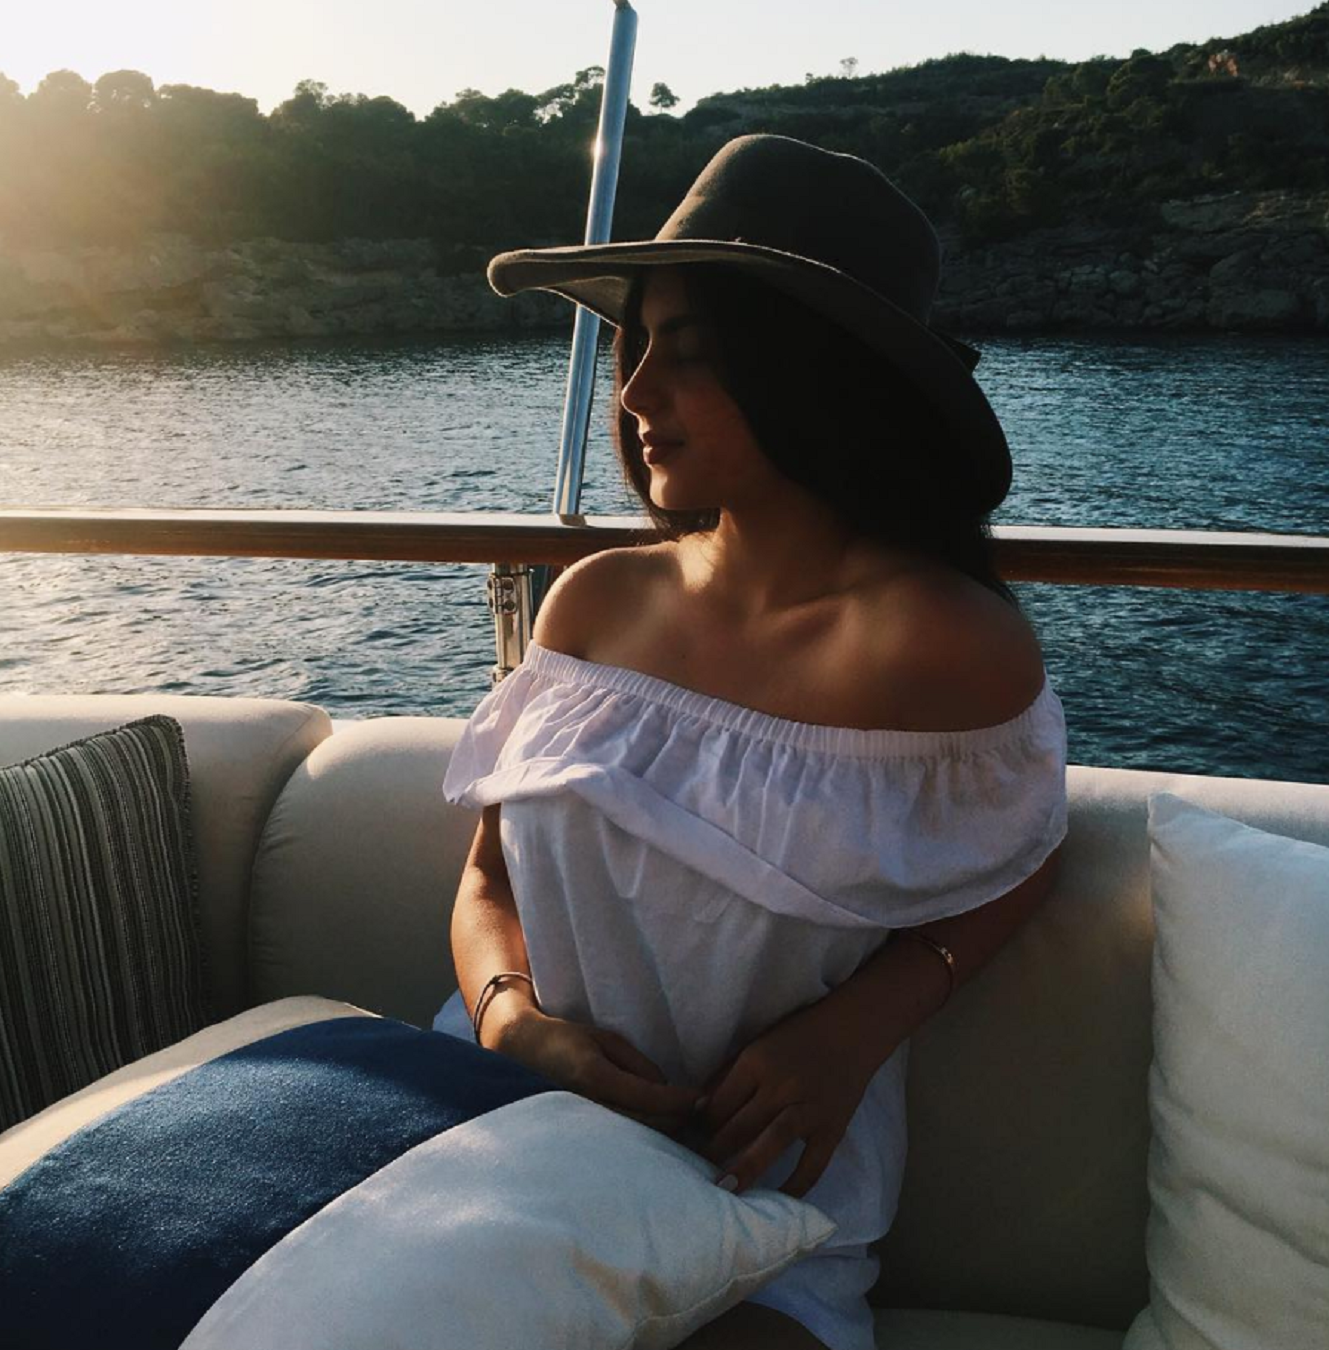 La sensual hijastra de Cesc Fàbregas triunfa en Instagram